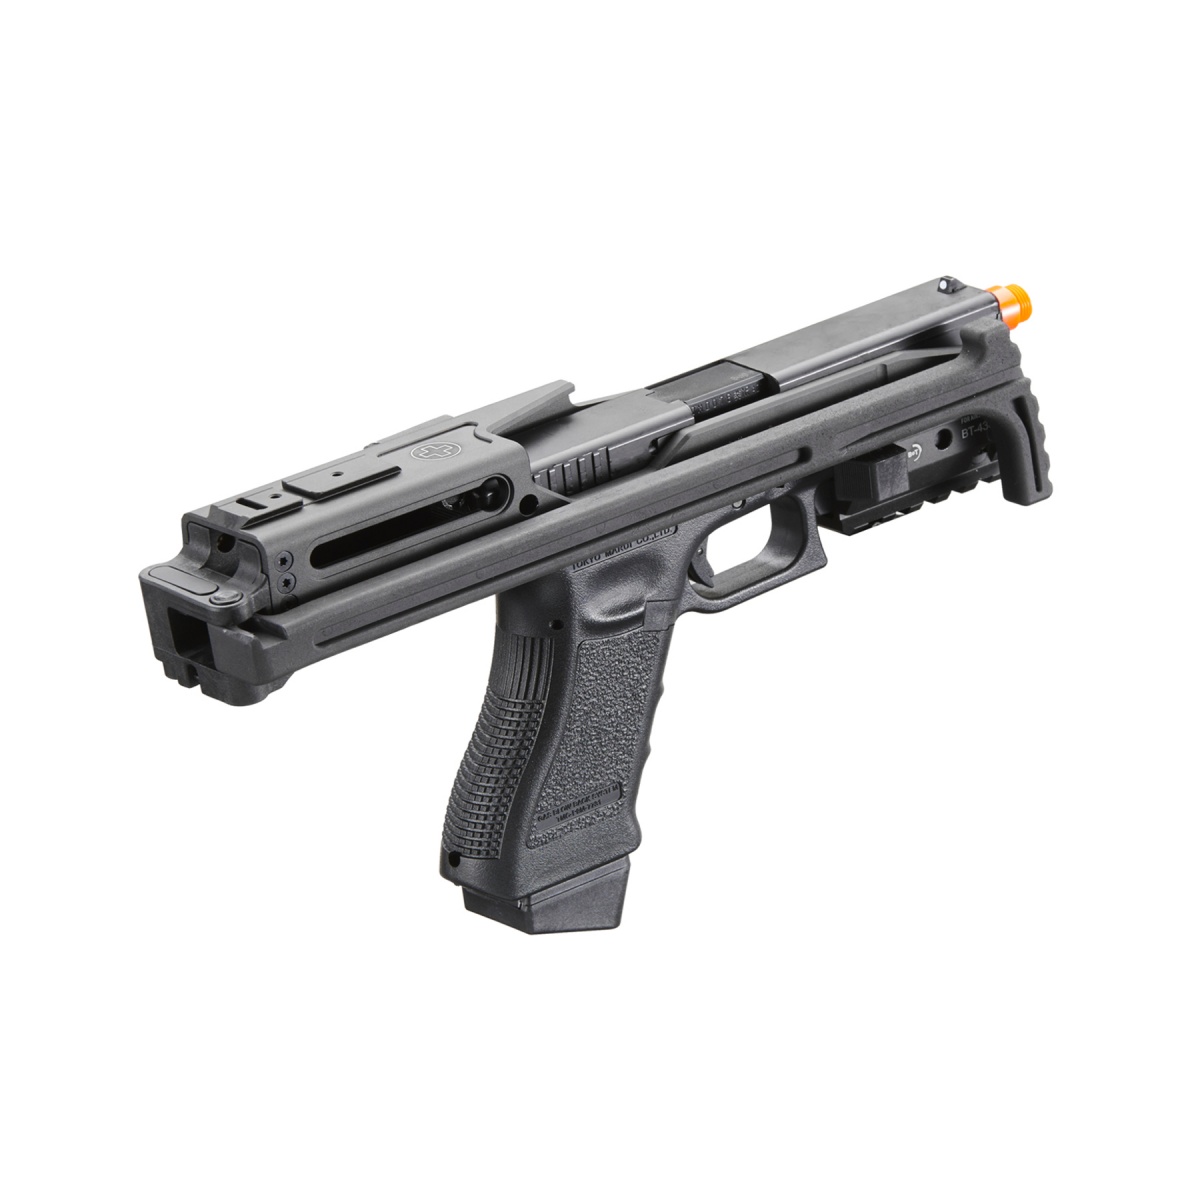 Limited Edition Glock 19 Gen 5 Gas Blowback Airsoft Pistol